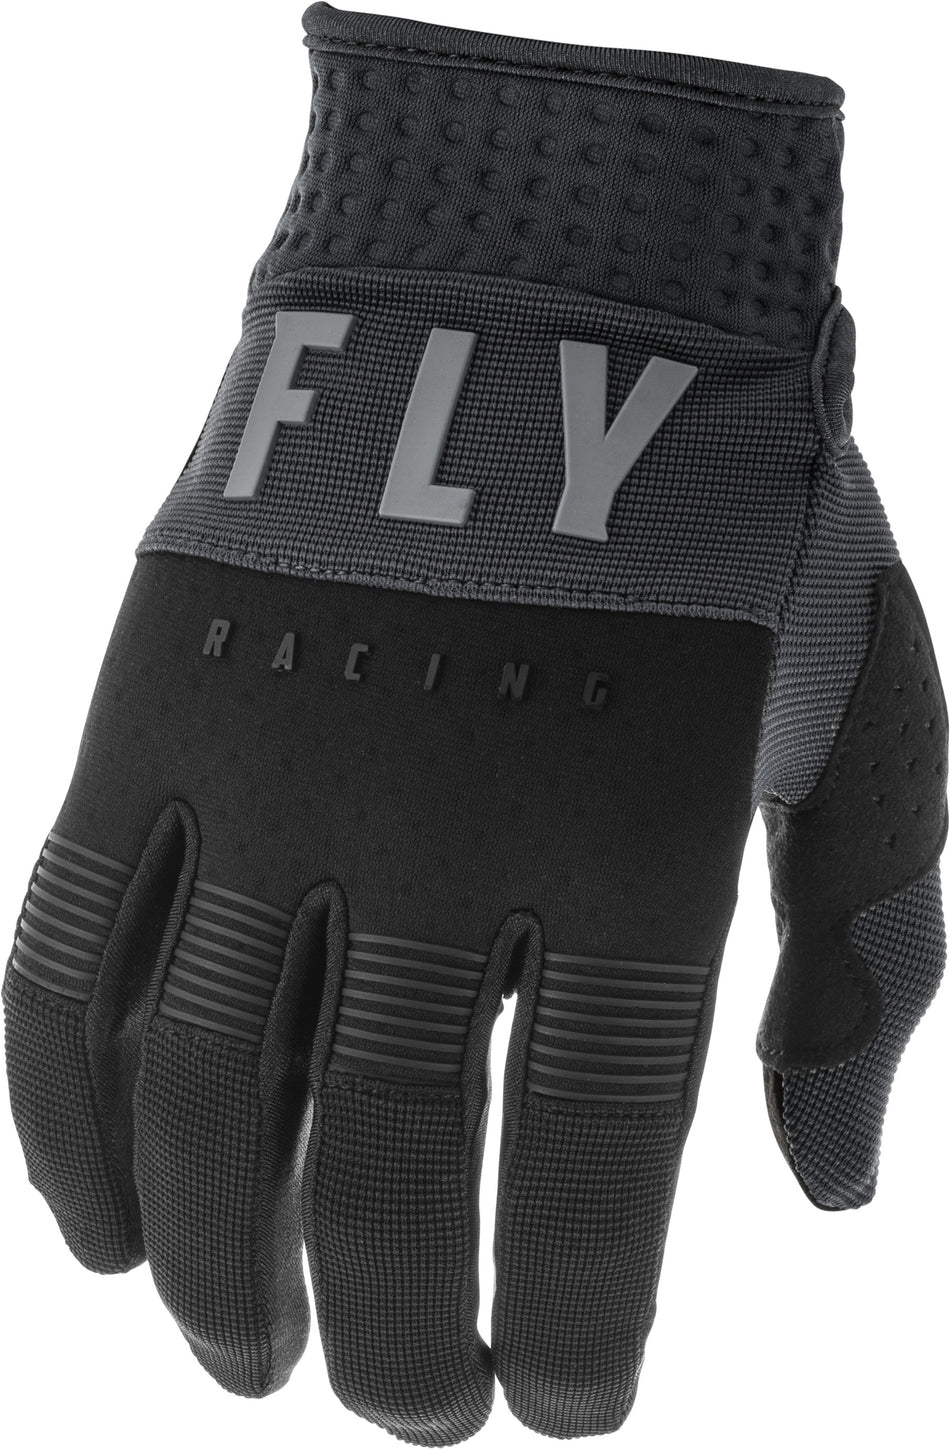 FLY RACING F-16 Gloves Black/Grey Sz 03 373-91003